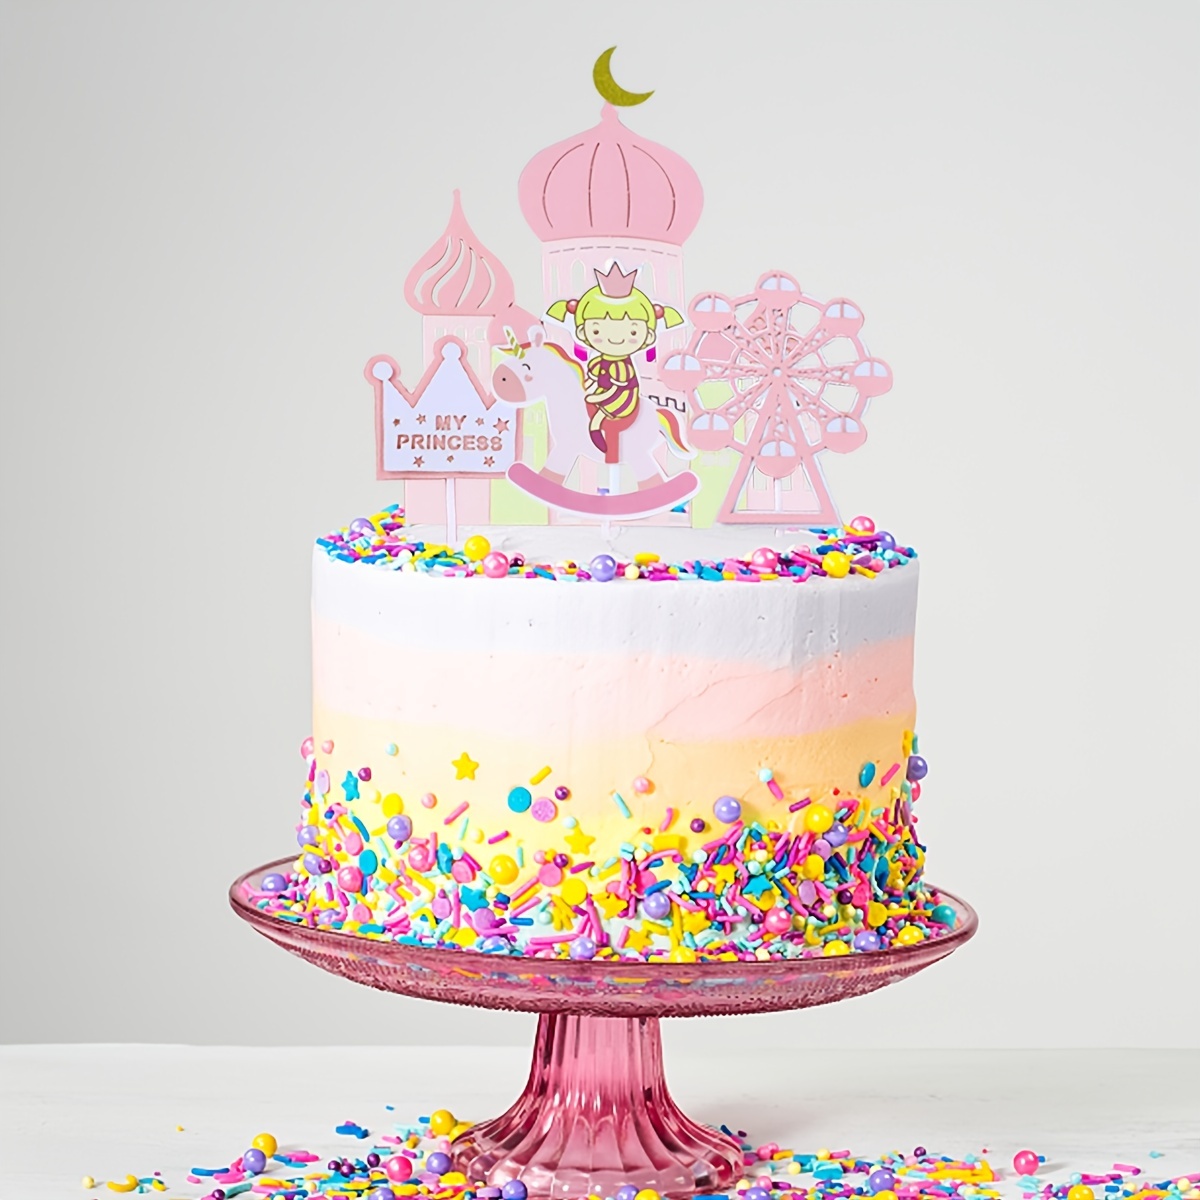 Birthday Cake Insert Golden Dollar Sign Cake Plug-in Party Baking